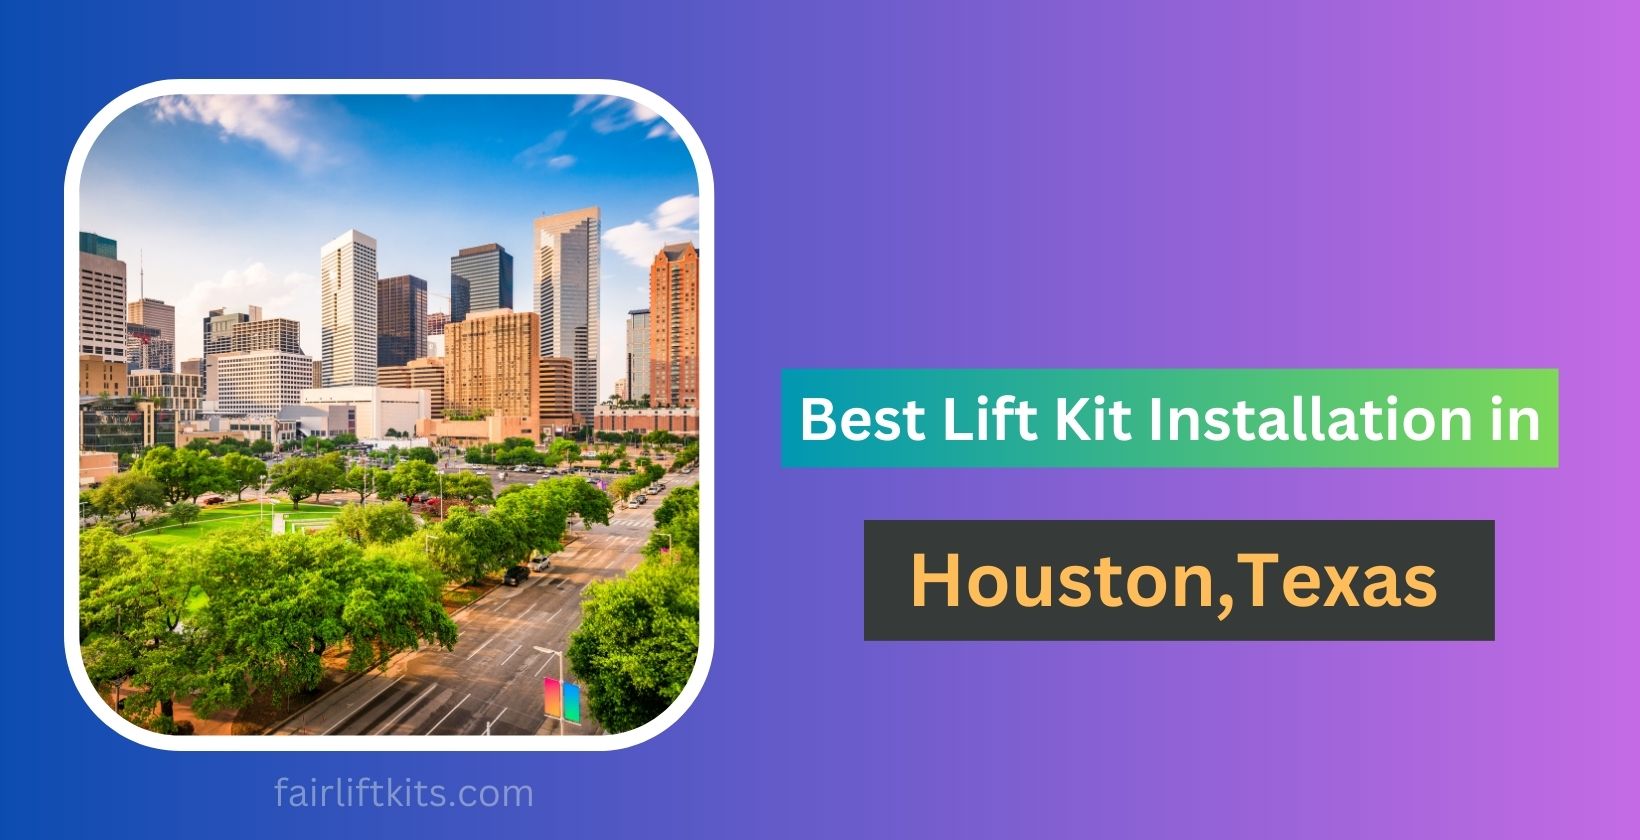 10 Best Lift Kit Installation in Houston